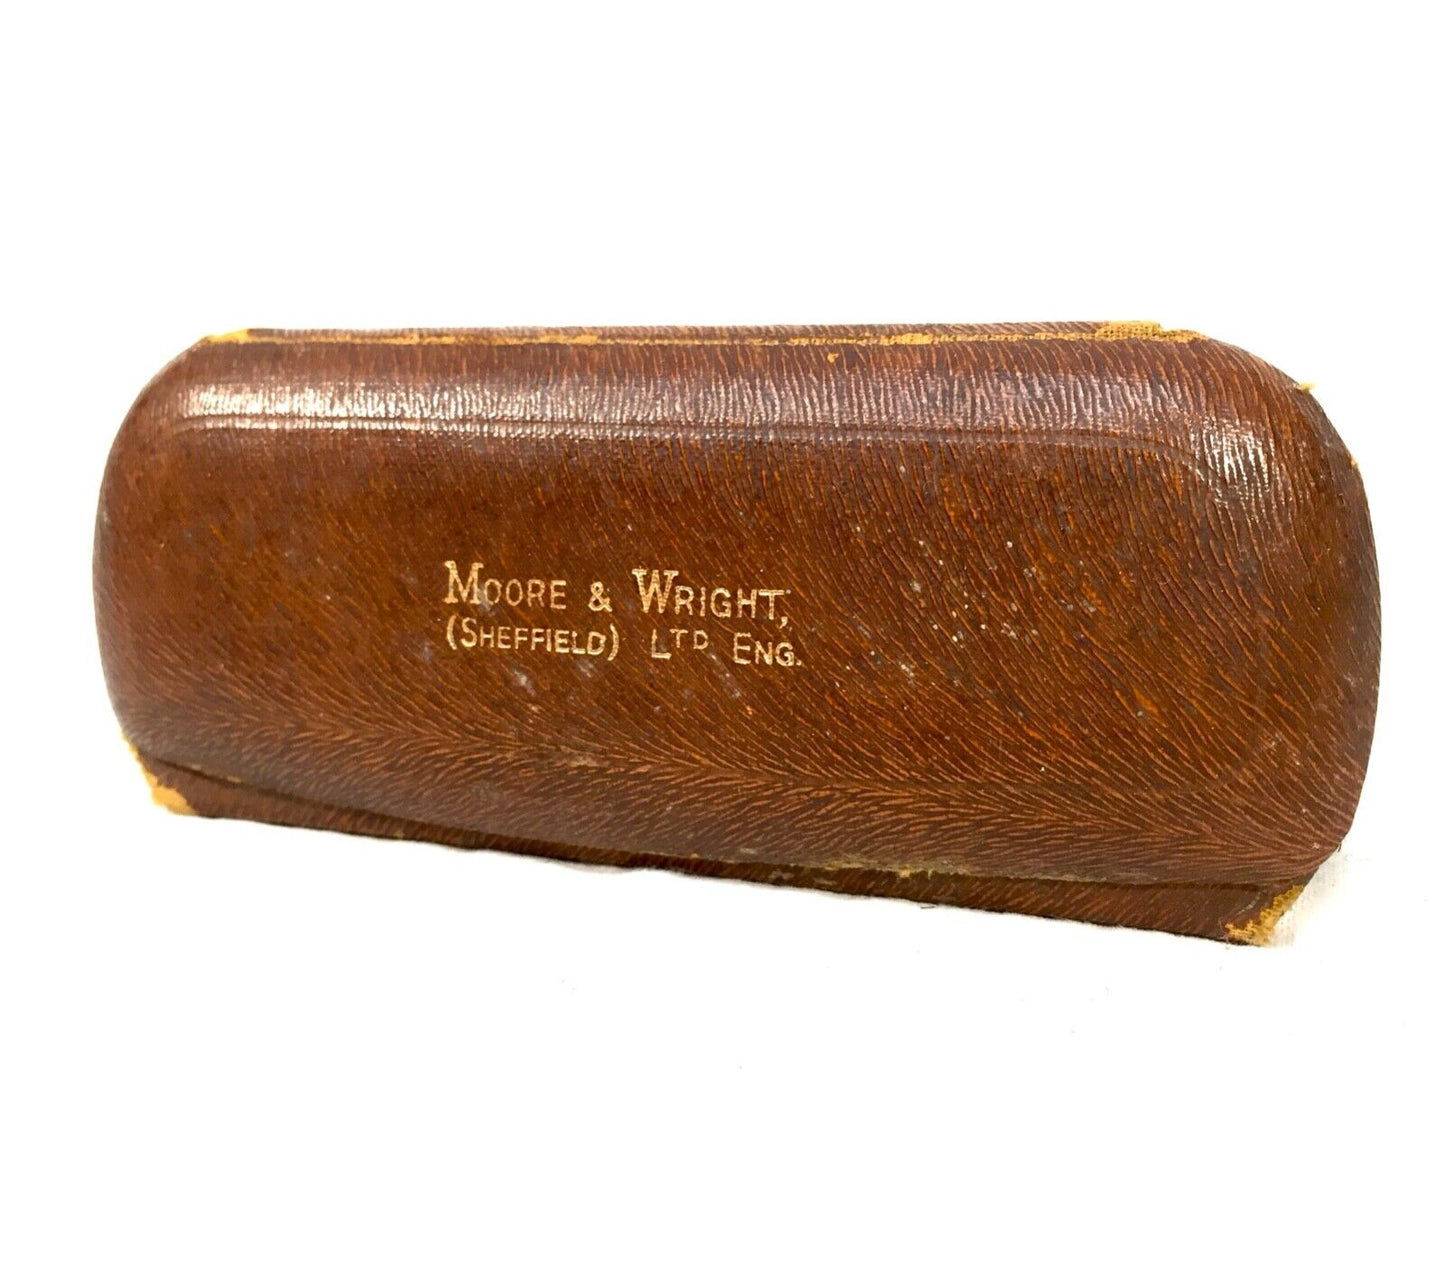 Antique Moore & Wright Micrometer Caliper Precision Instrument in Original Case